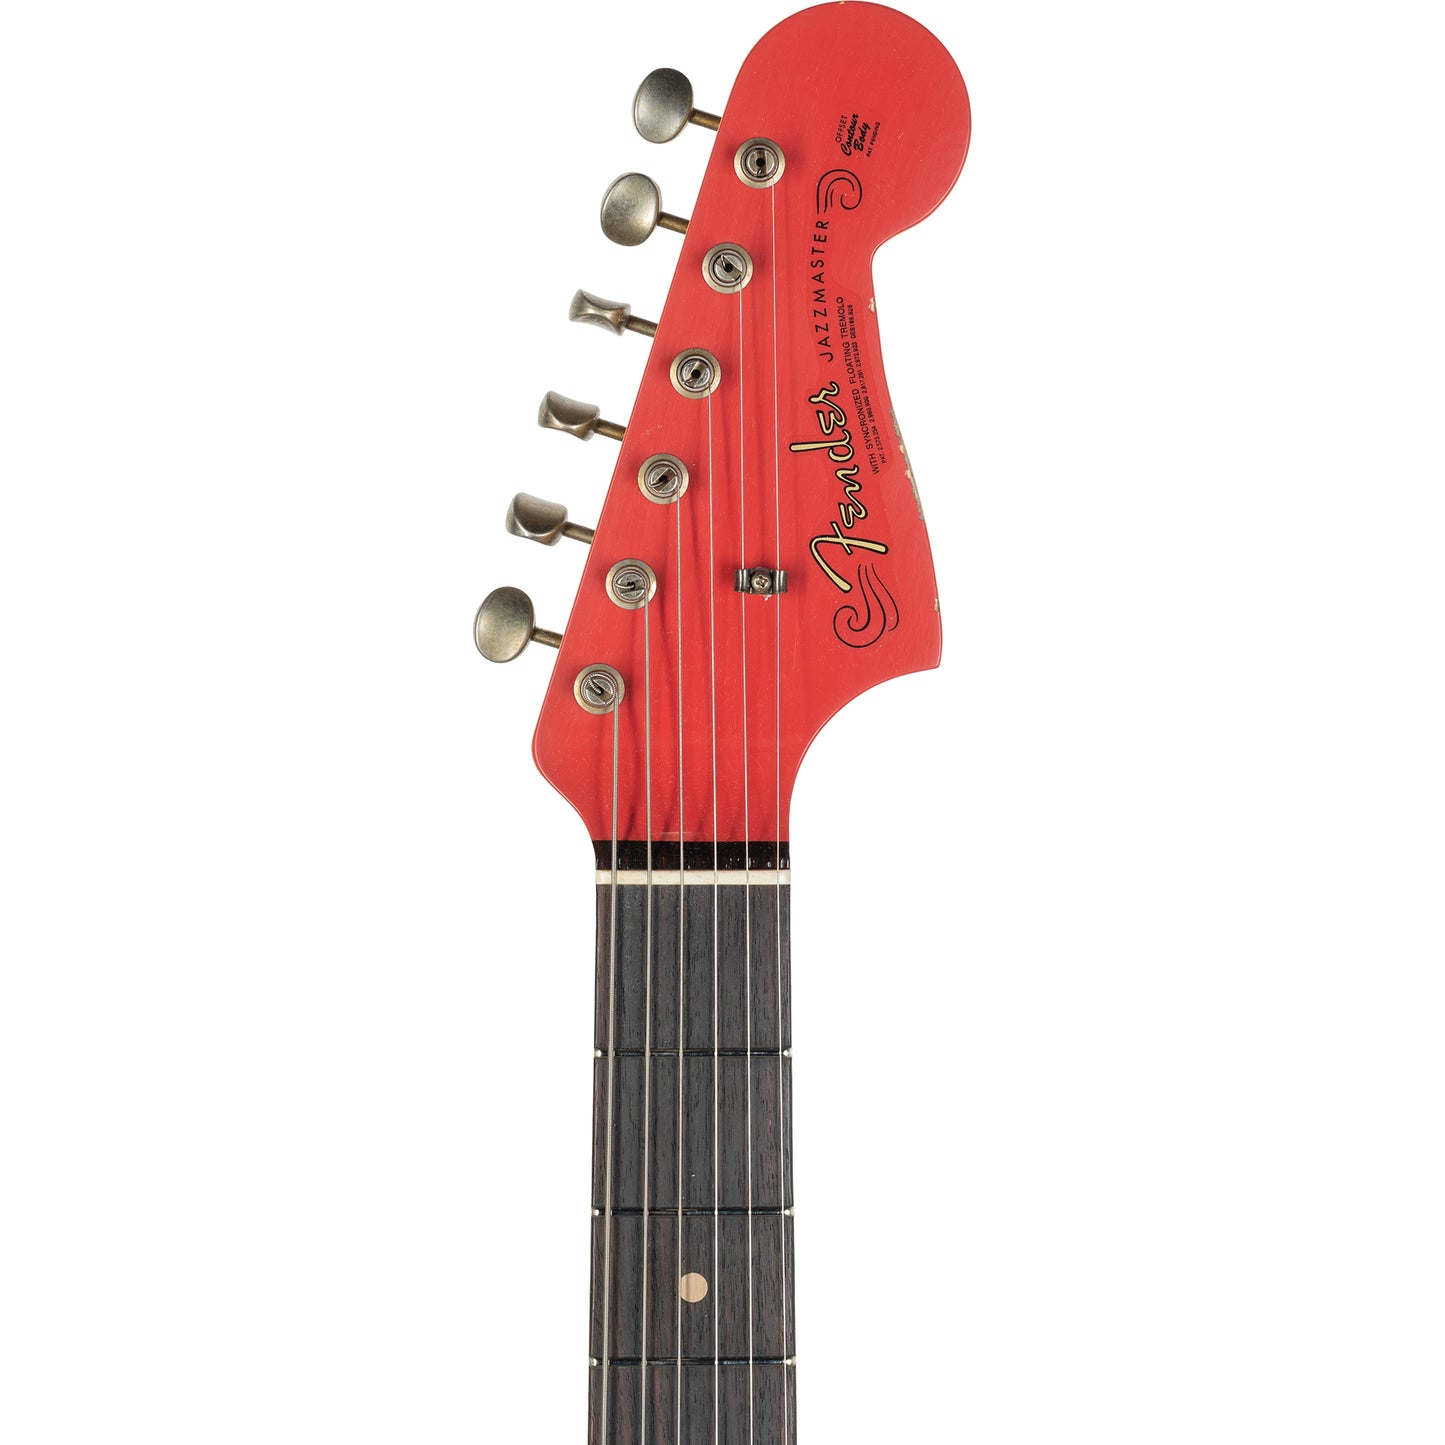 Fender Custom Shop 62 Jazzmaster Relic with Painted Headcap - Fiesta Red